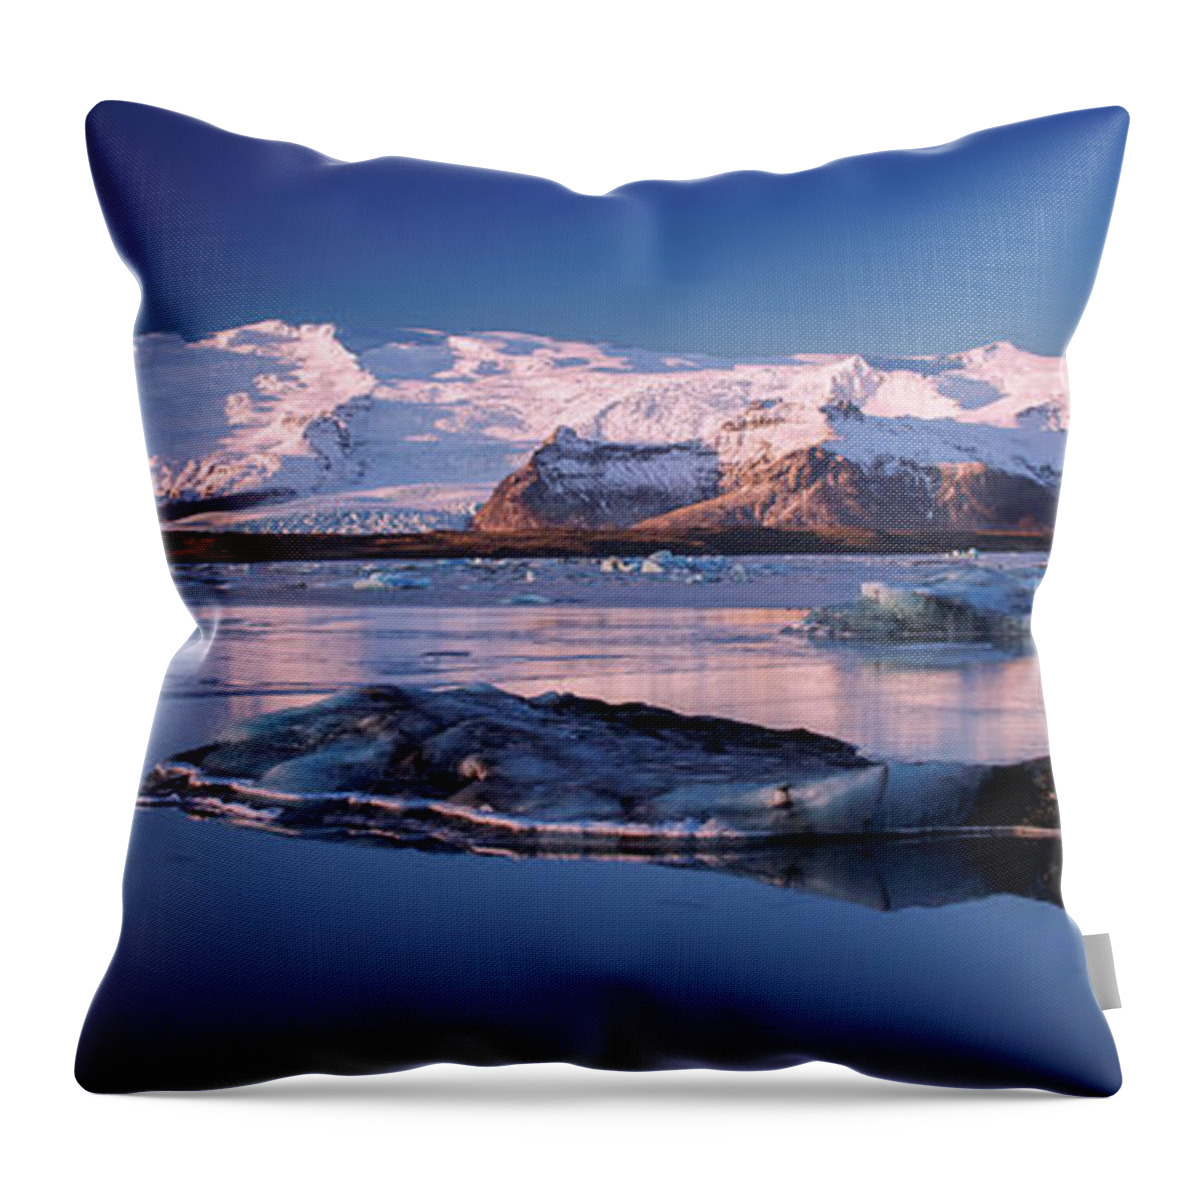 Northern Throw Pillow featuring the photograph Vatnajokull National Park by Robert Grac